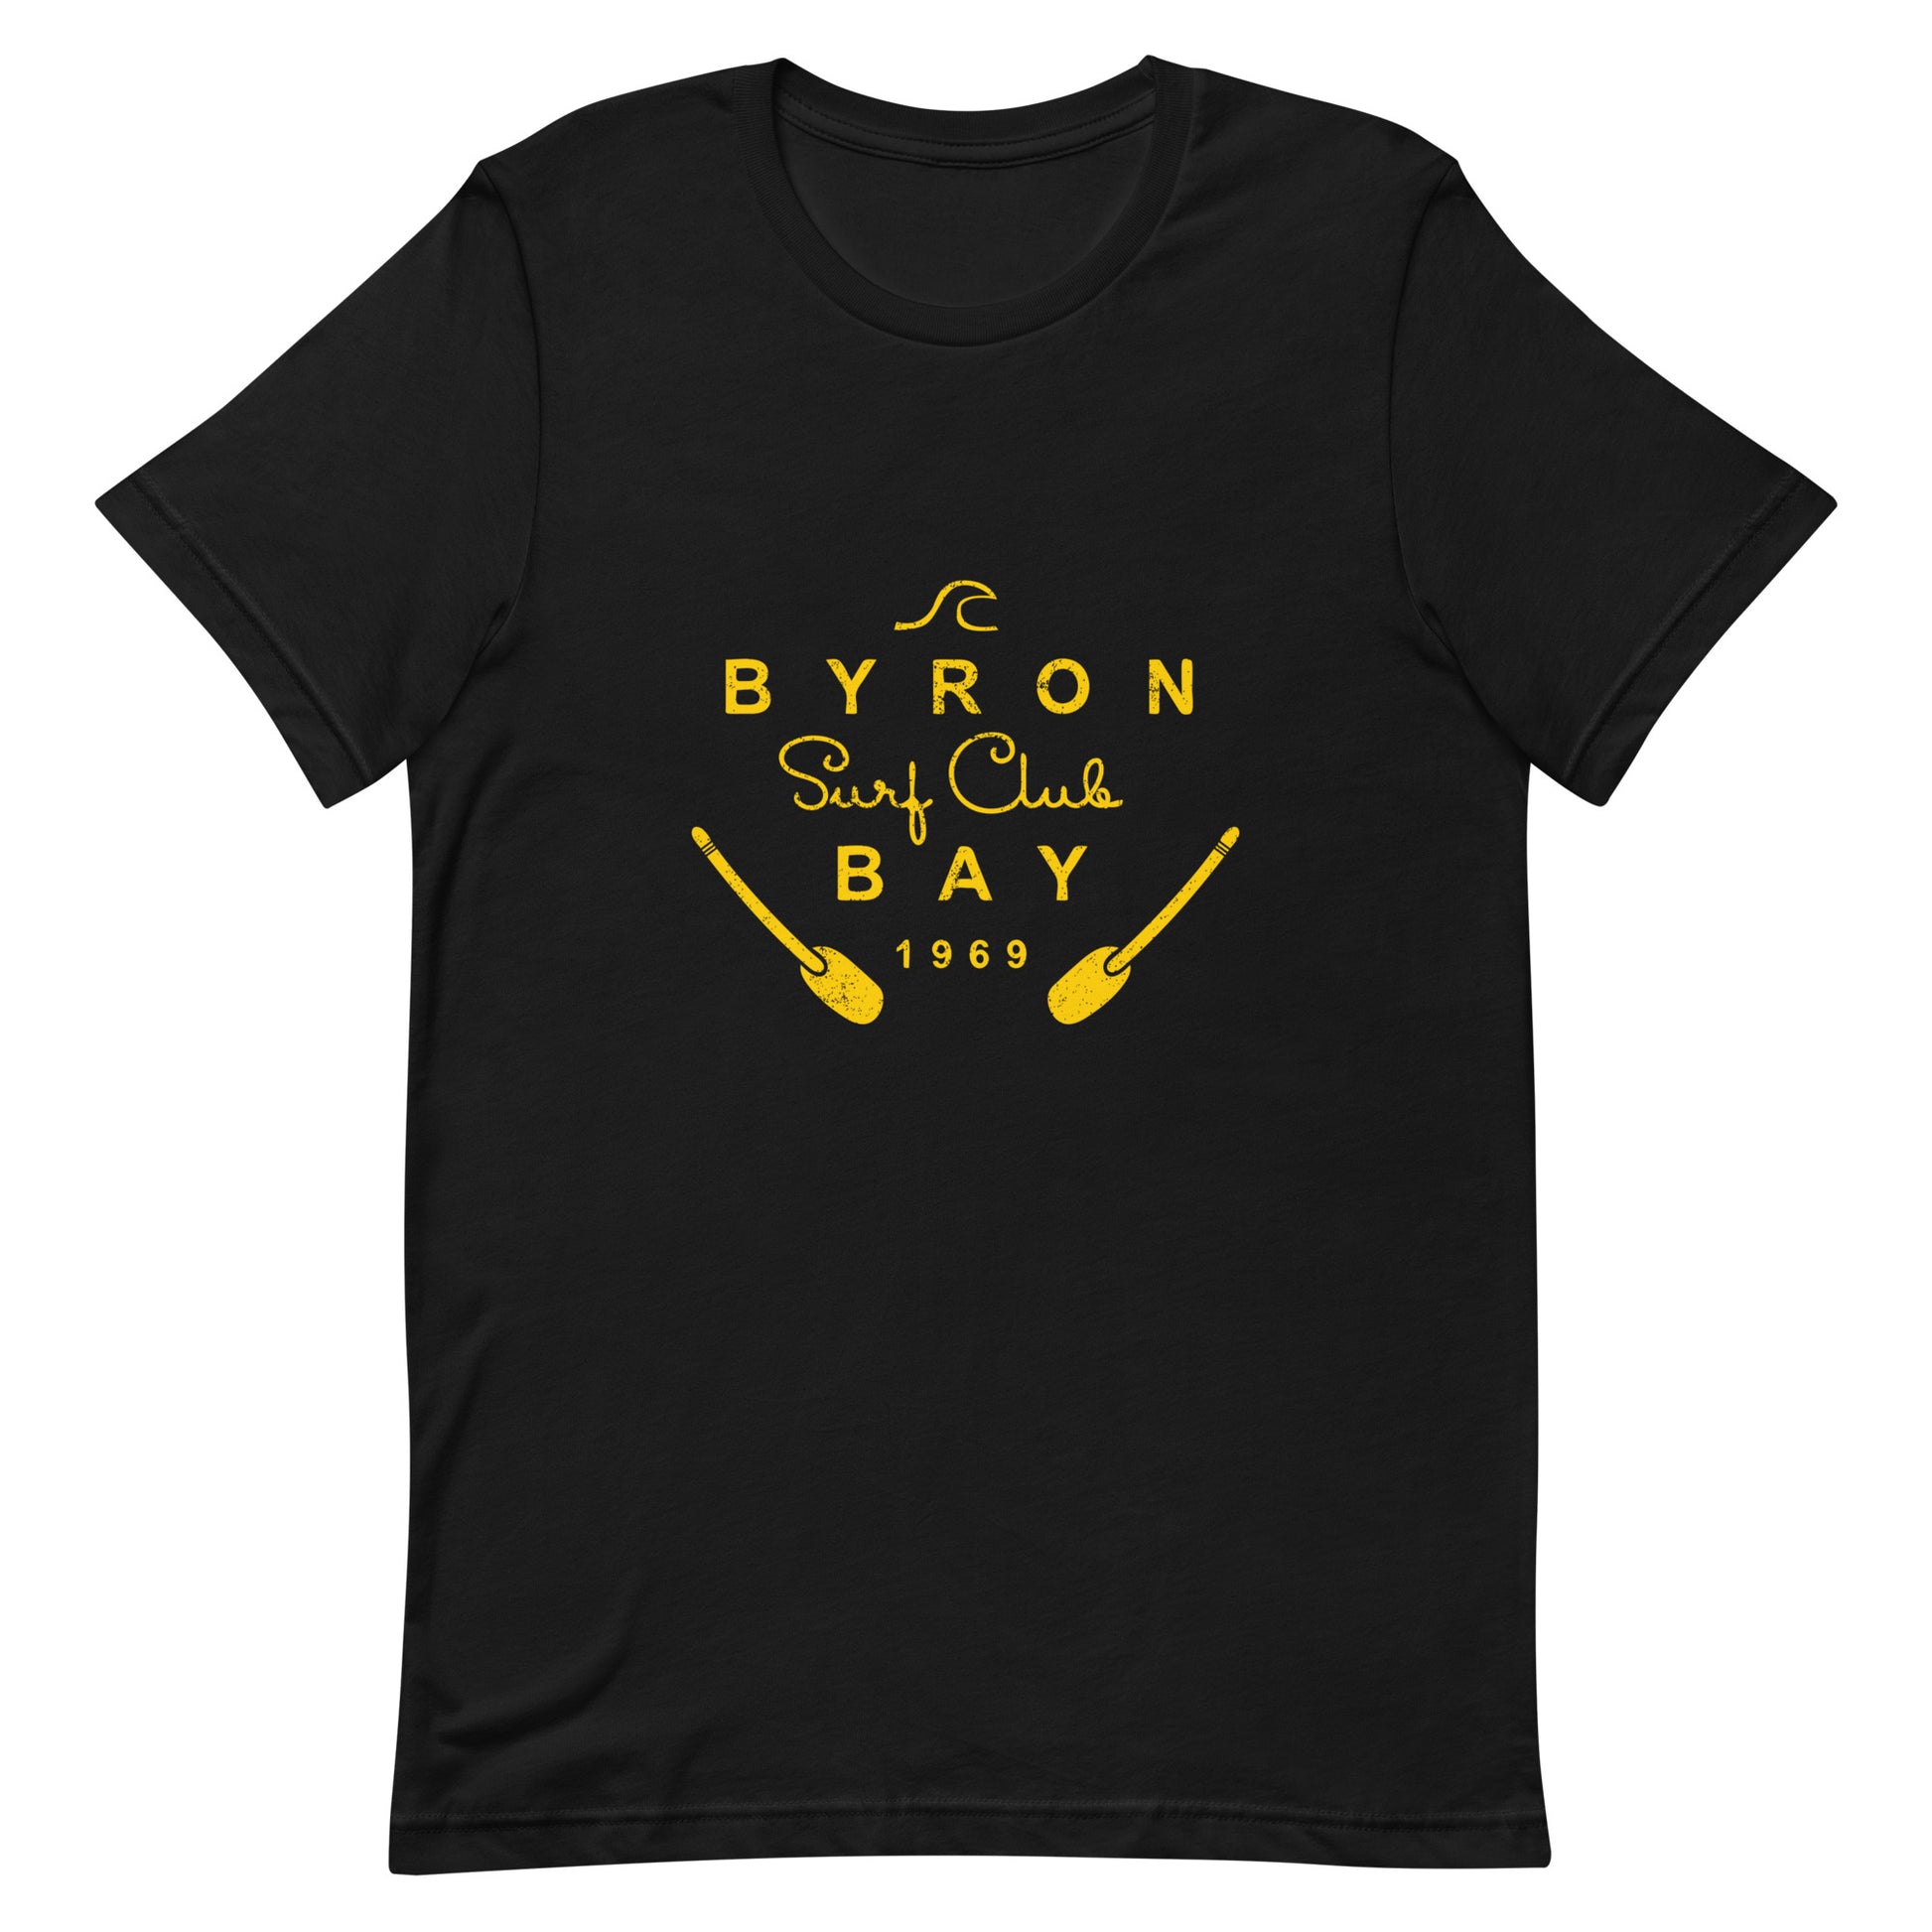  Unisex T-Shirt - Black - Front flat lay view - Byron Bay Surf Club logo on front - Genuine Byron Bay Merchandise | Produced by Go Sea Kayak Byron Bay 